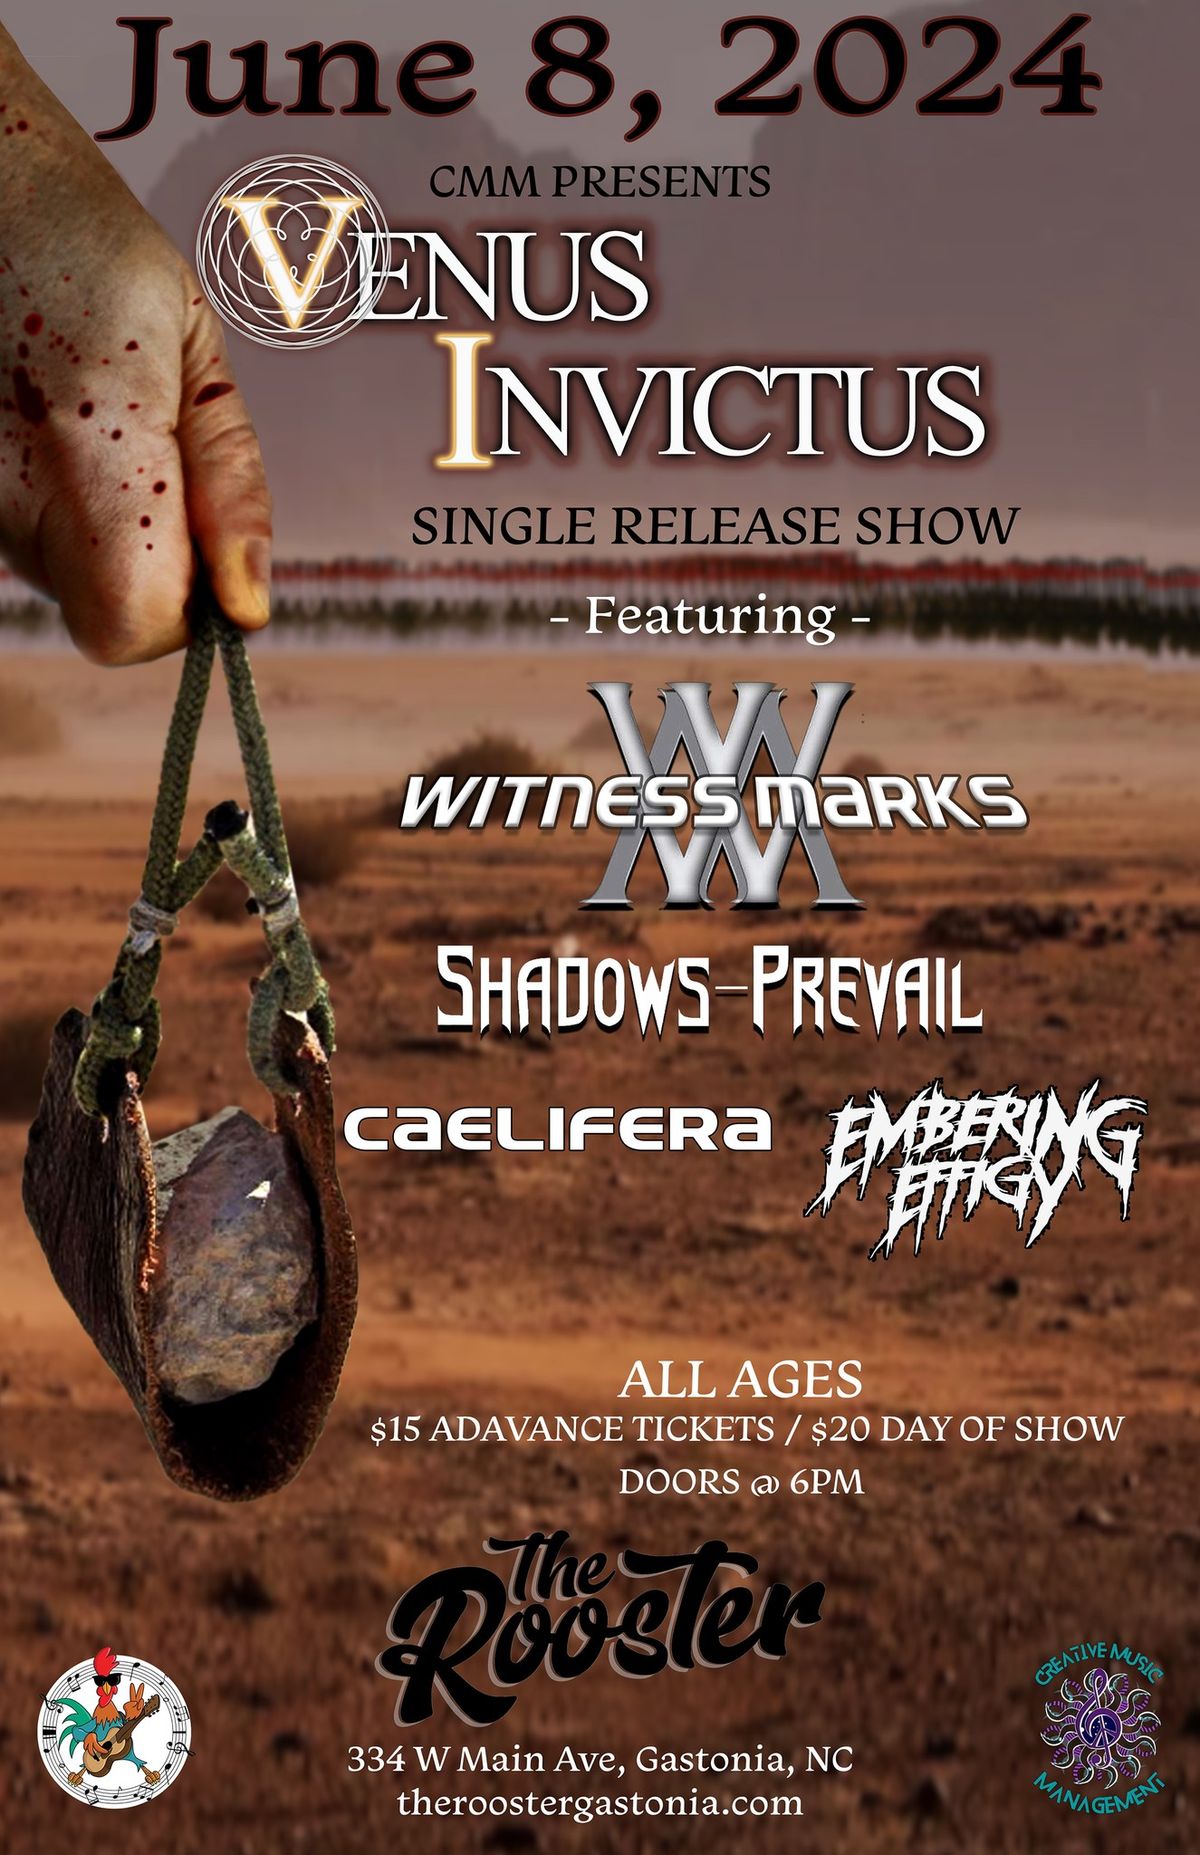 Venus Invictus Single Release Party